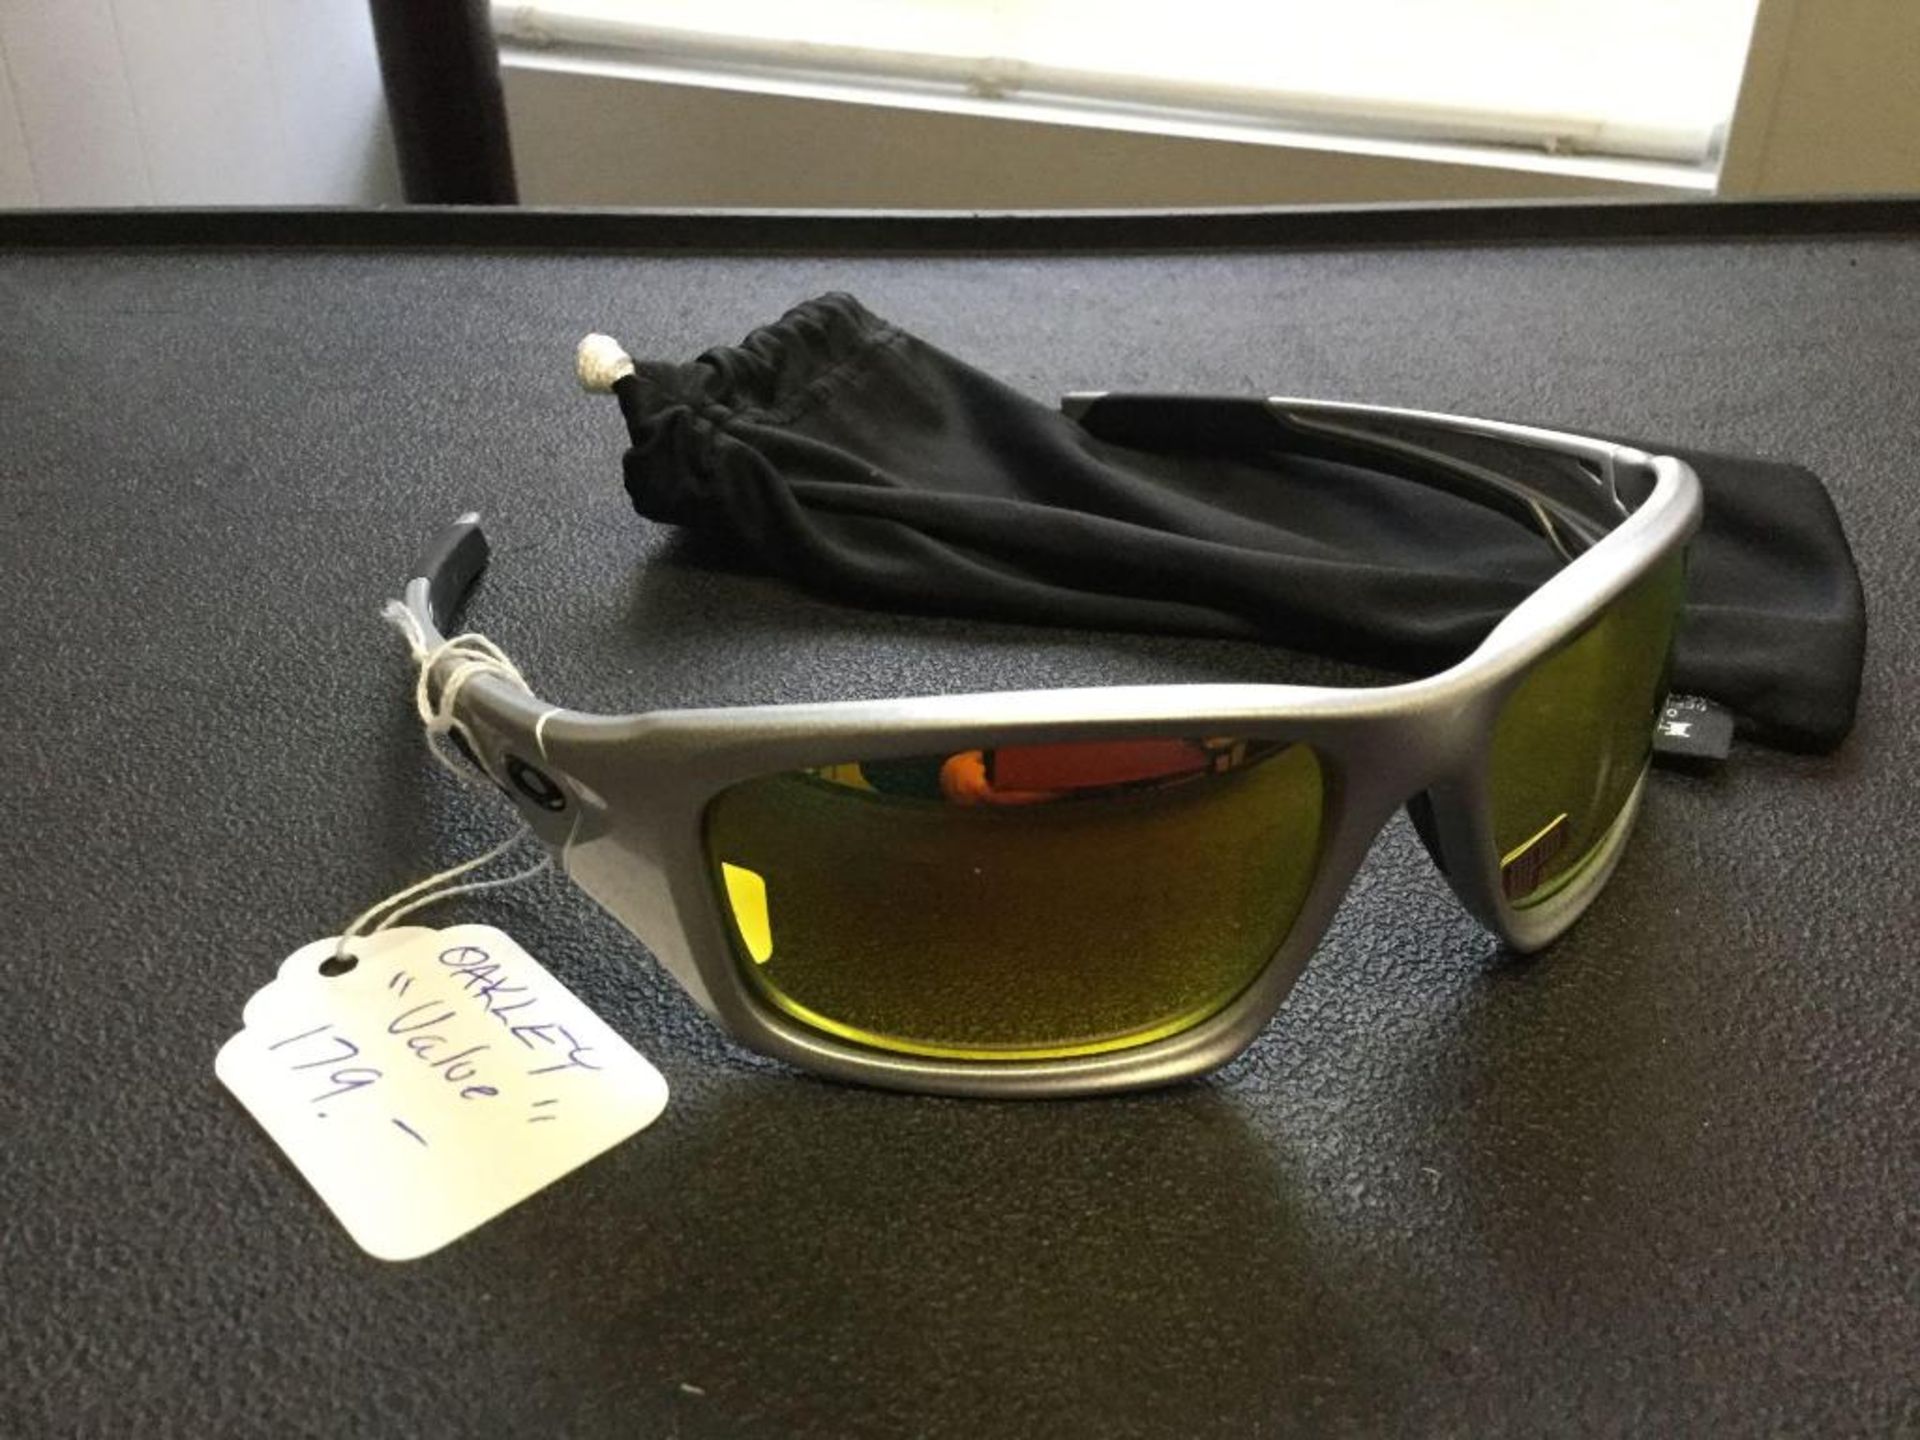 Oakley "Value" Sunglasses silver/grey frames value 179 - Image 2 of 2